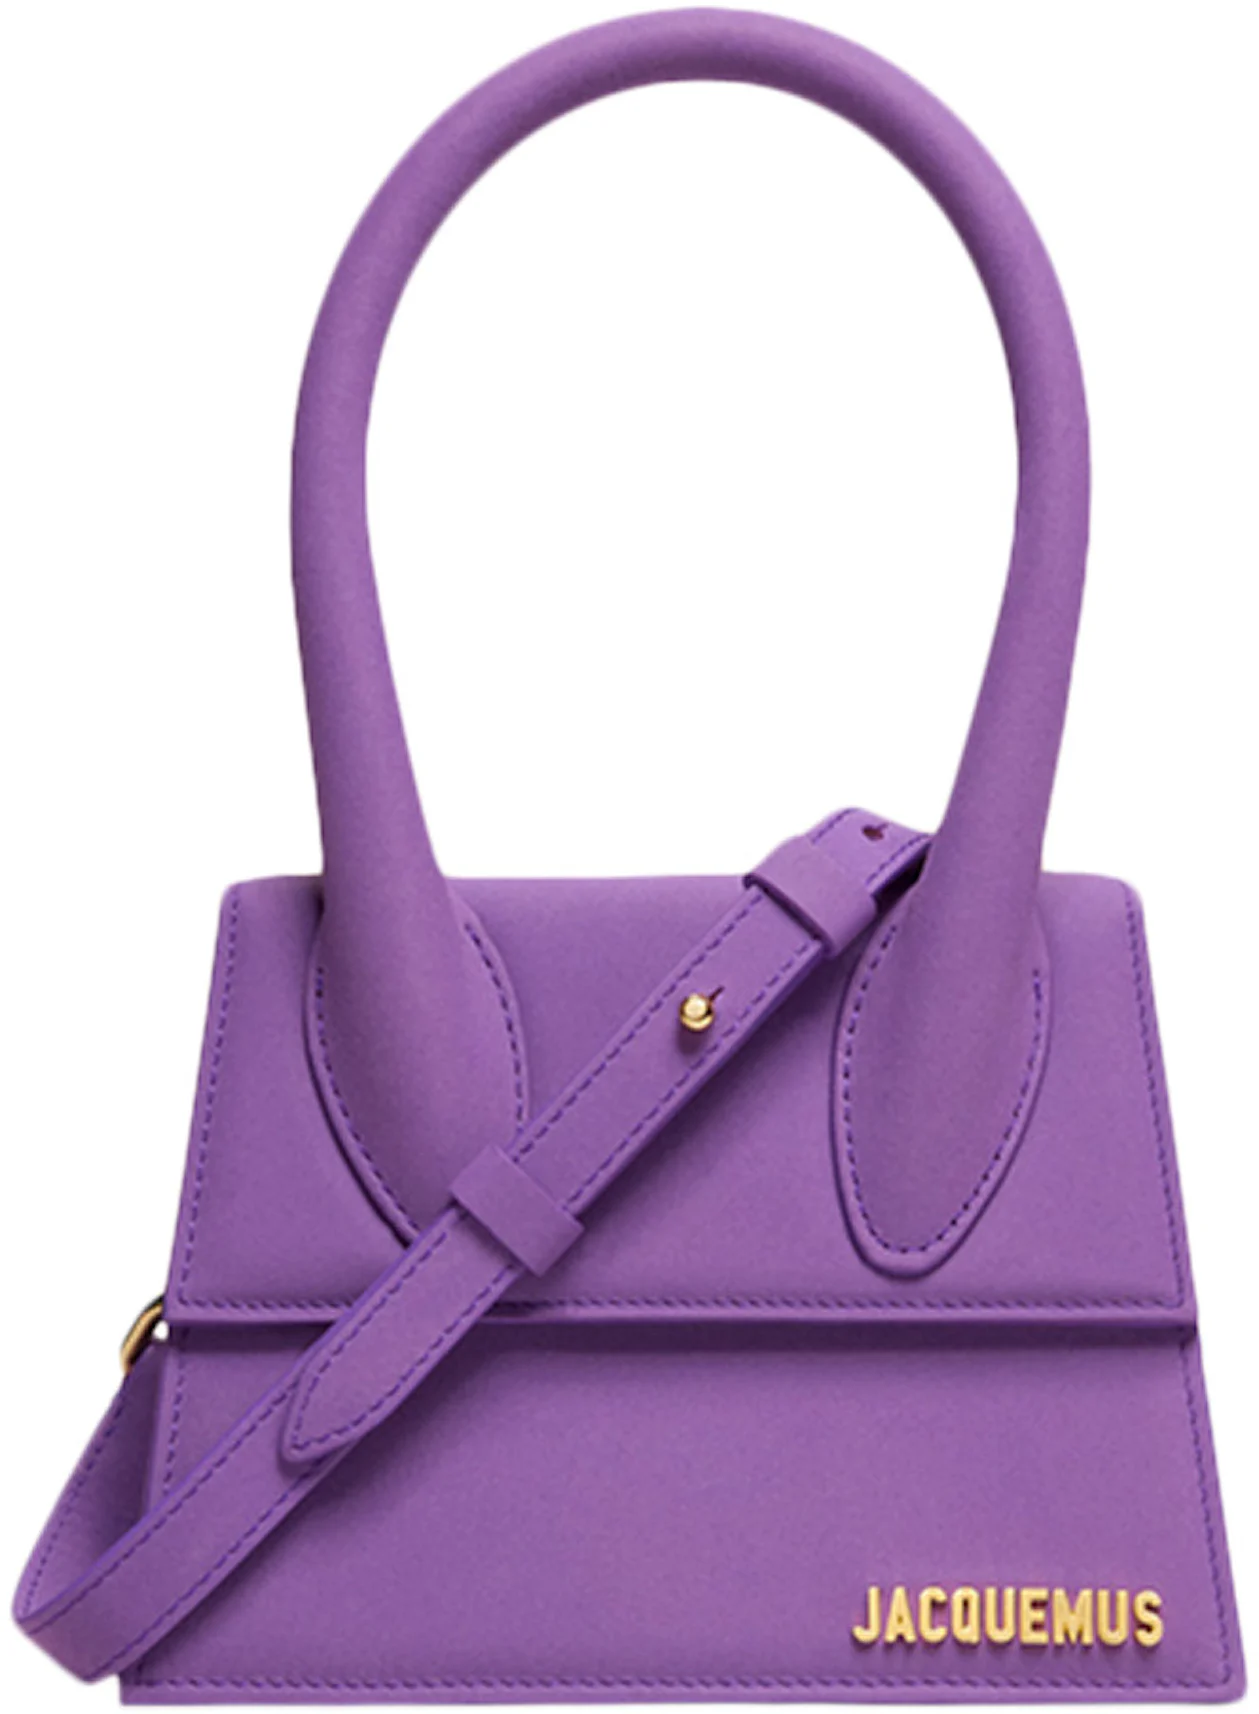 Jacquemus Le Chiquito Moyen Signature Handbag Purple in Cowskin Leather ...